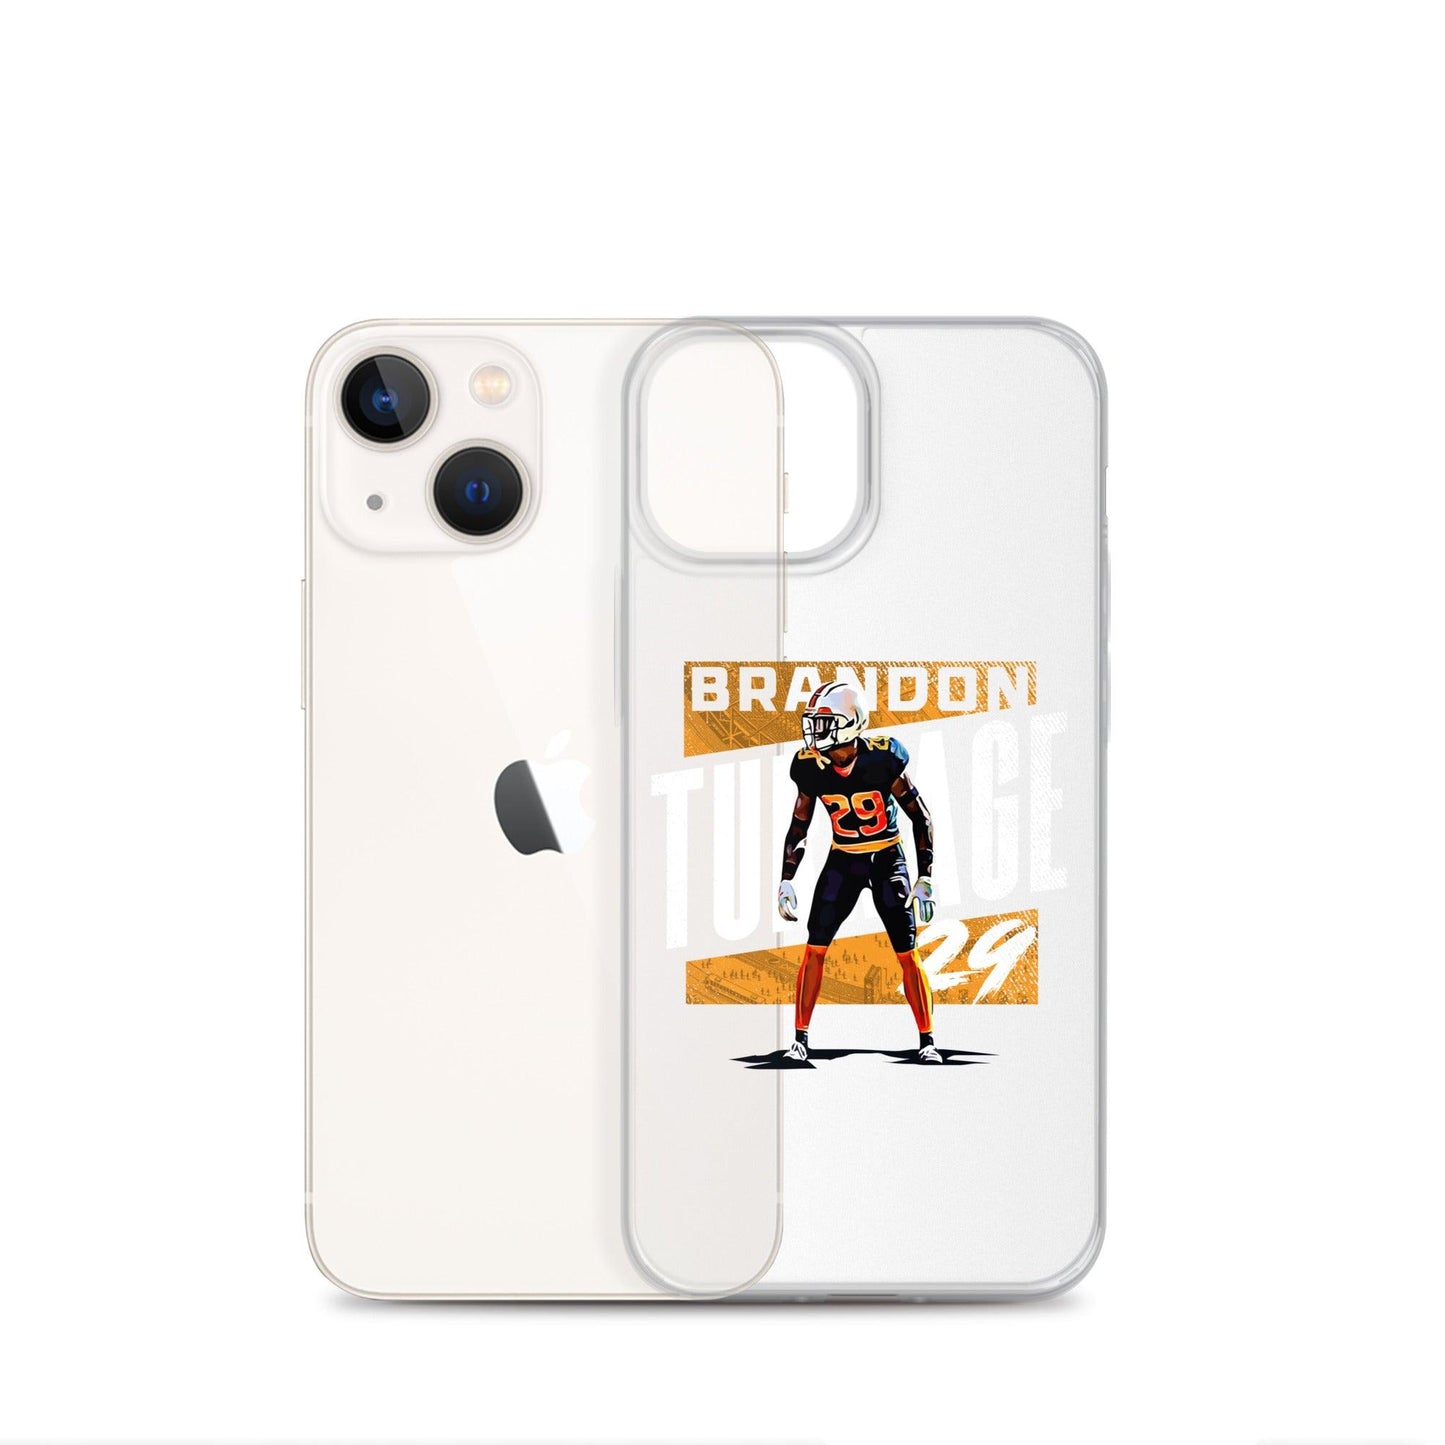 Brandon Turnage "29" iPhone Case - Fan Arch